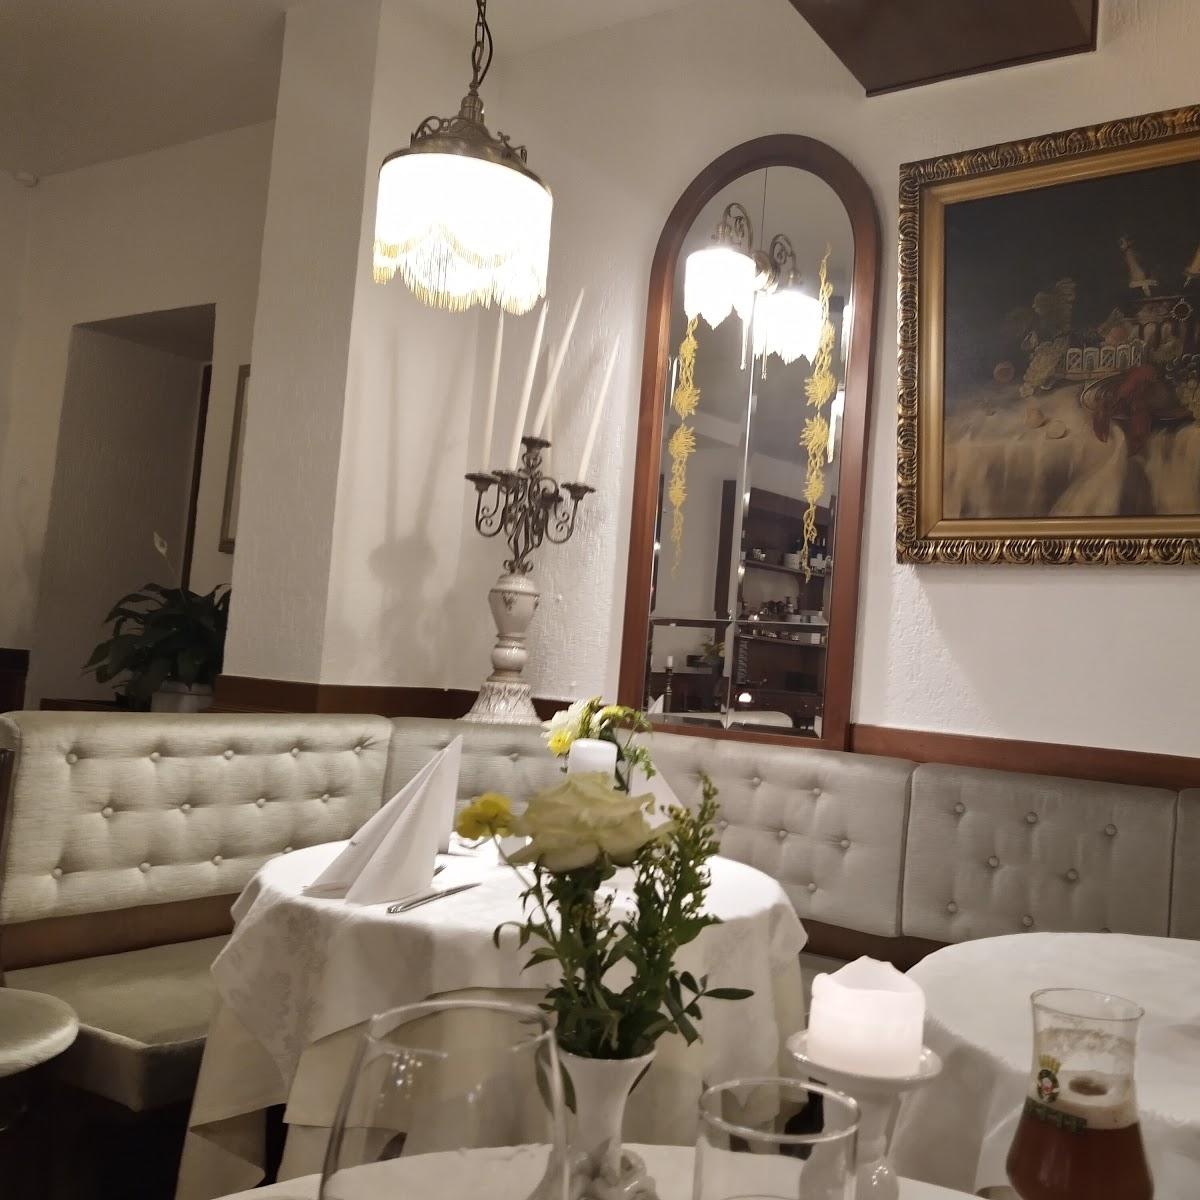 Restaurant "Ristorante Panini" in  Neuwied